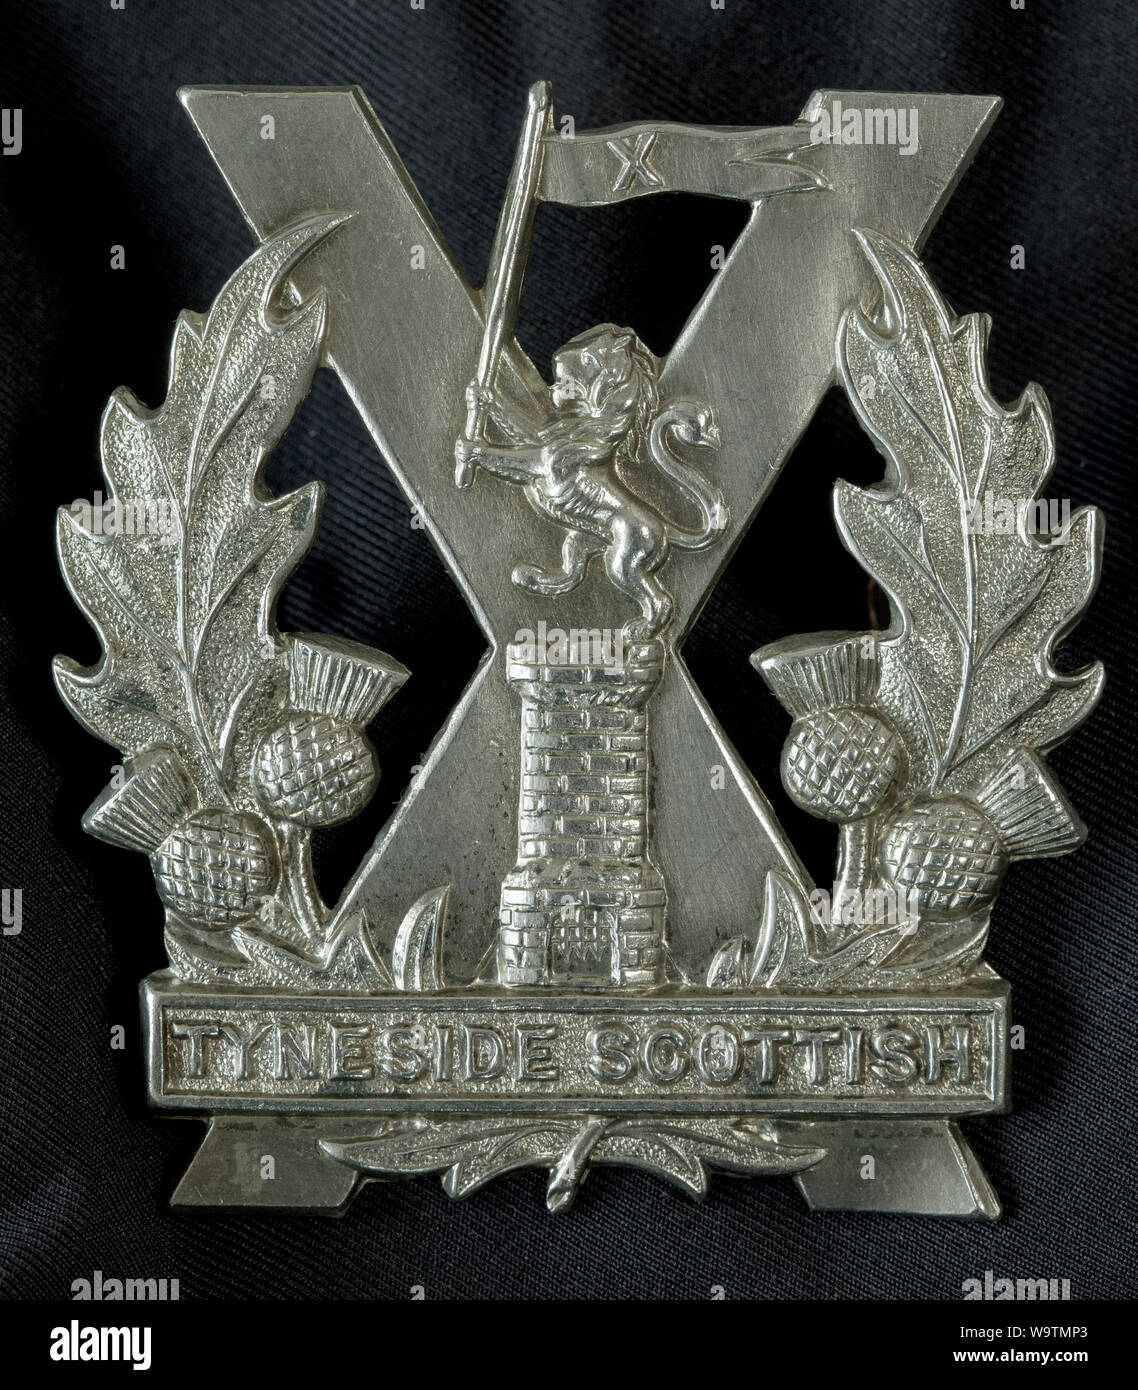 Insigne militaire - Tyneside Scottish Regiment Banque D'Images